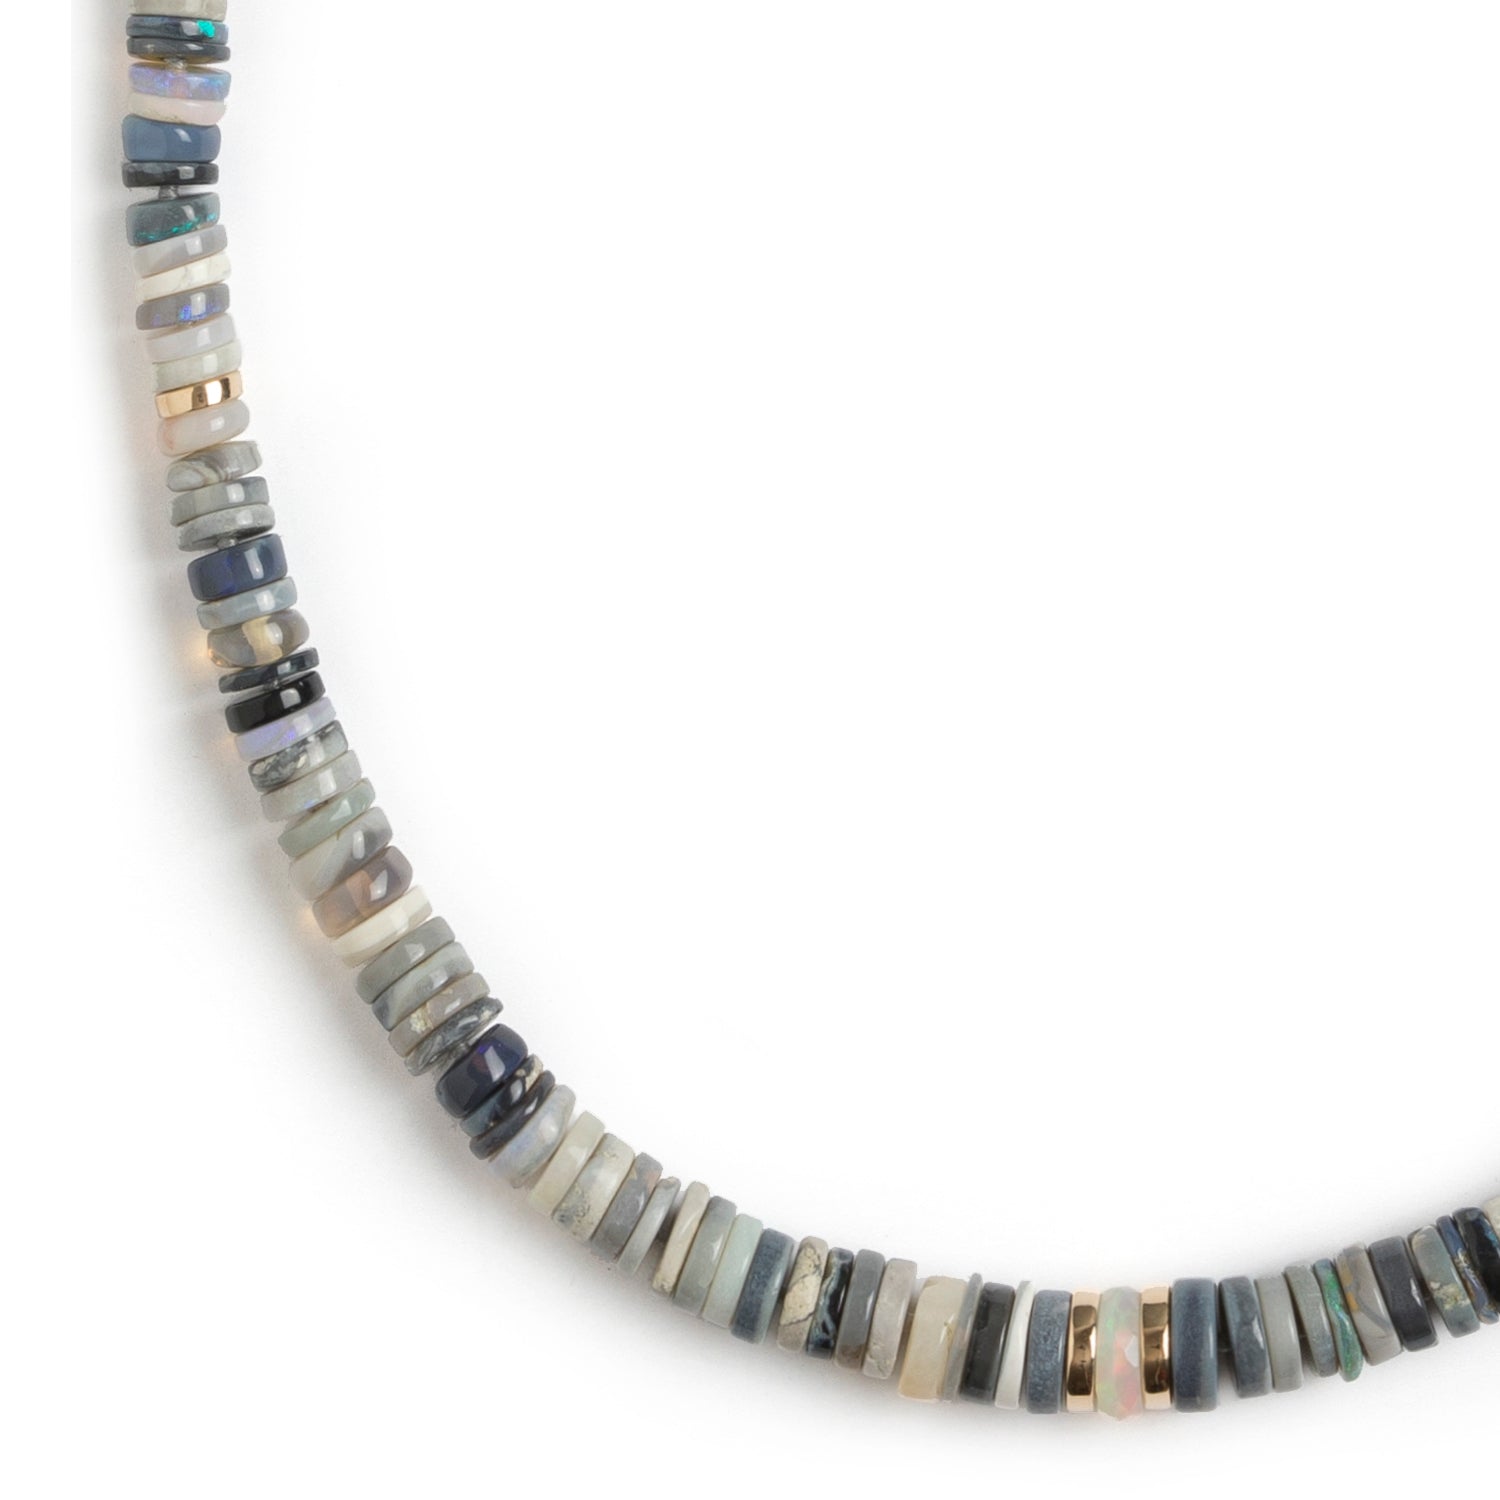 Opal Heishi Bead Necklace